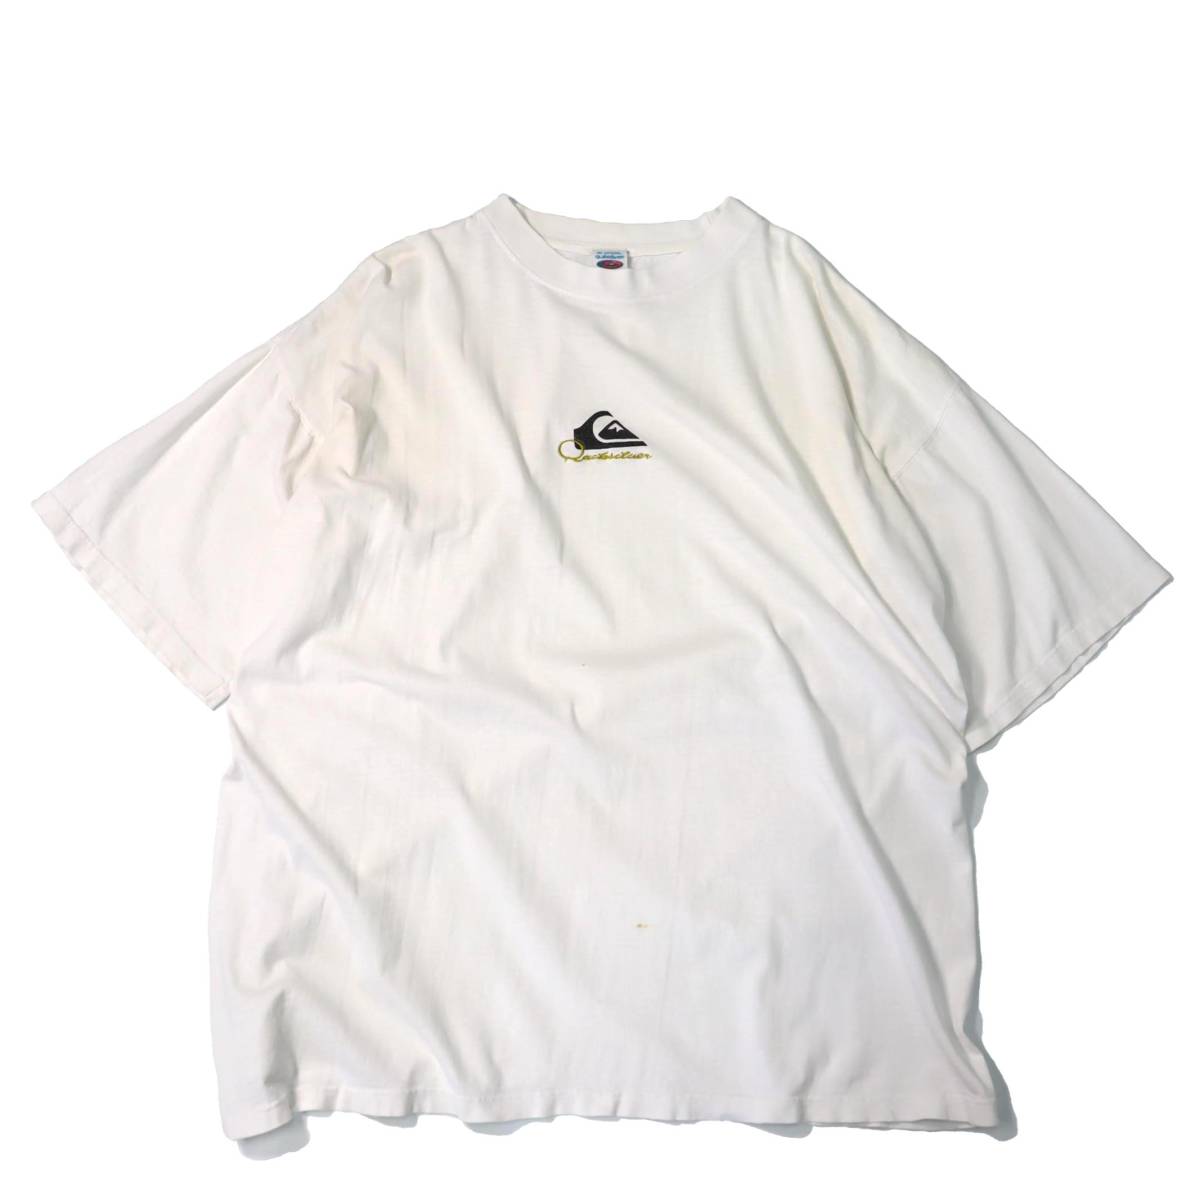 [Bigger] 90s Quiksilver ロゴ Tシャツ ビッグサイズ クイックシルバー オールド サーフ スケート プリント 刺繍 ビンテージ vintage 80s